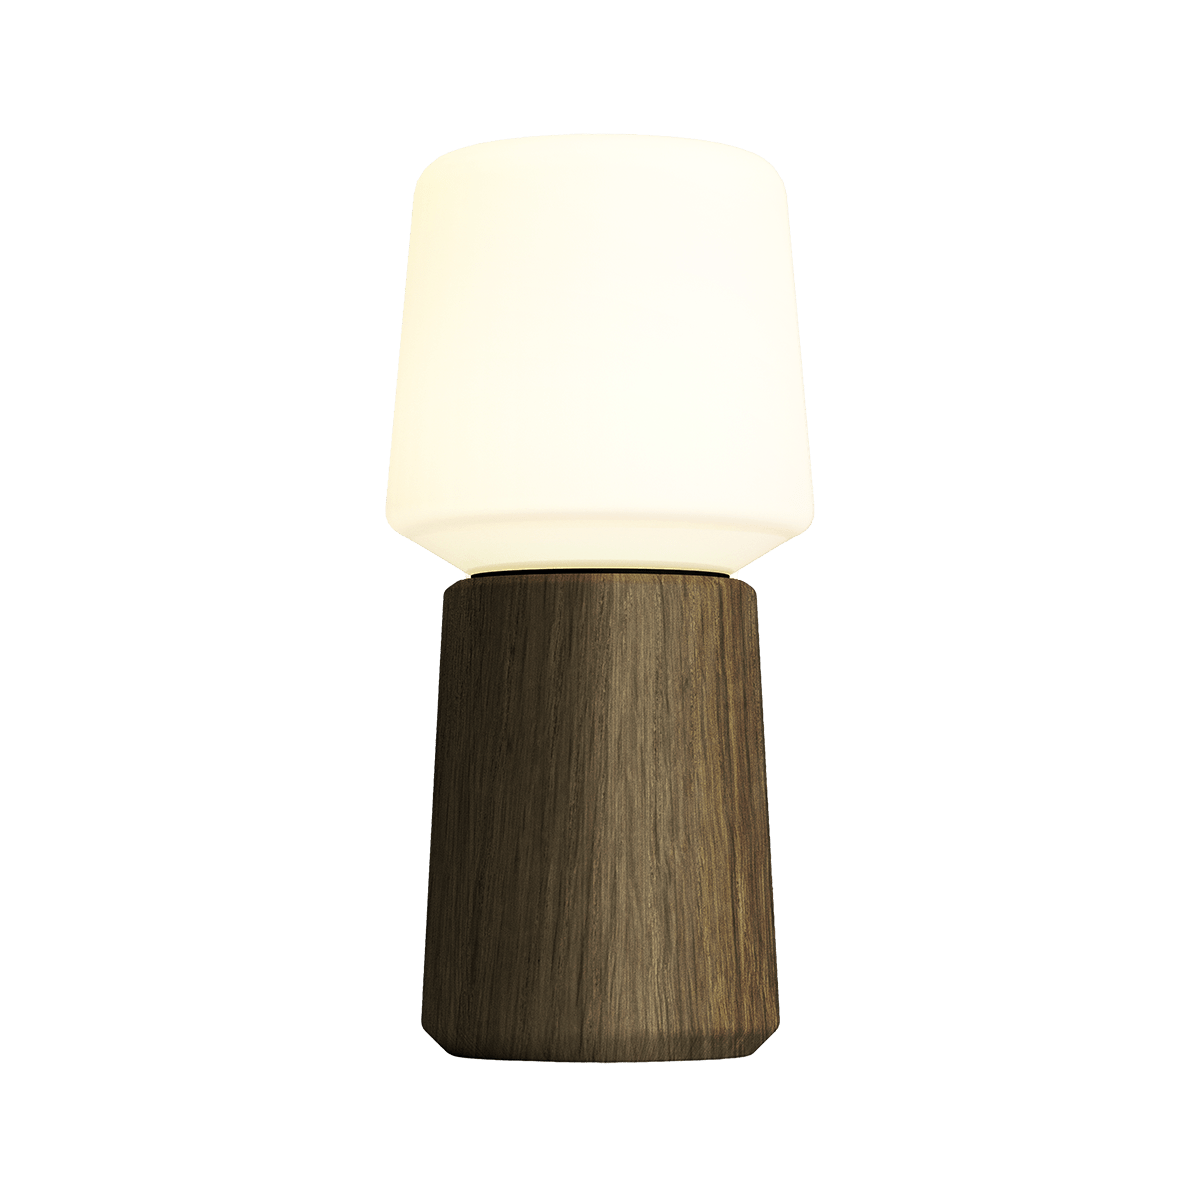 variant_600233% | Ambience - Lamp Intelligent + Oslo base [Contract] - Smoked Oak 10 | SACKit